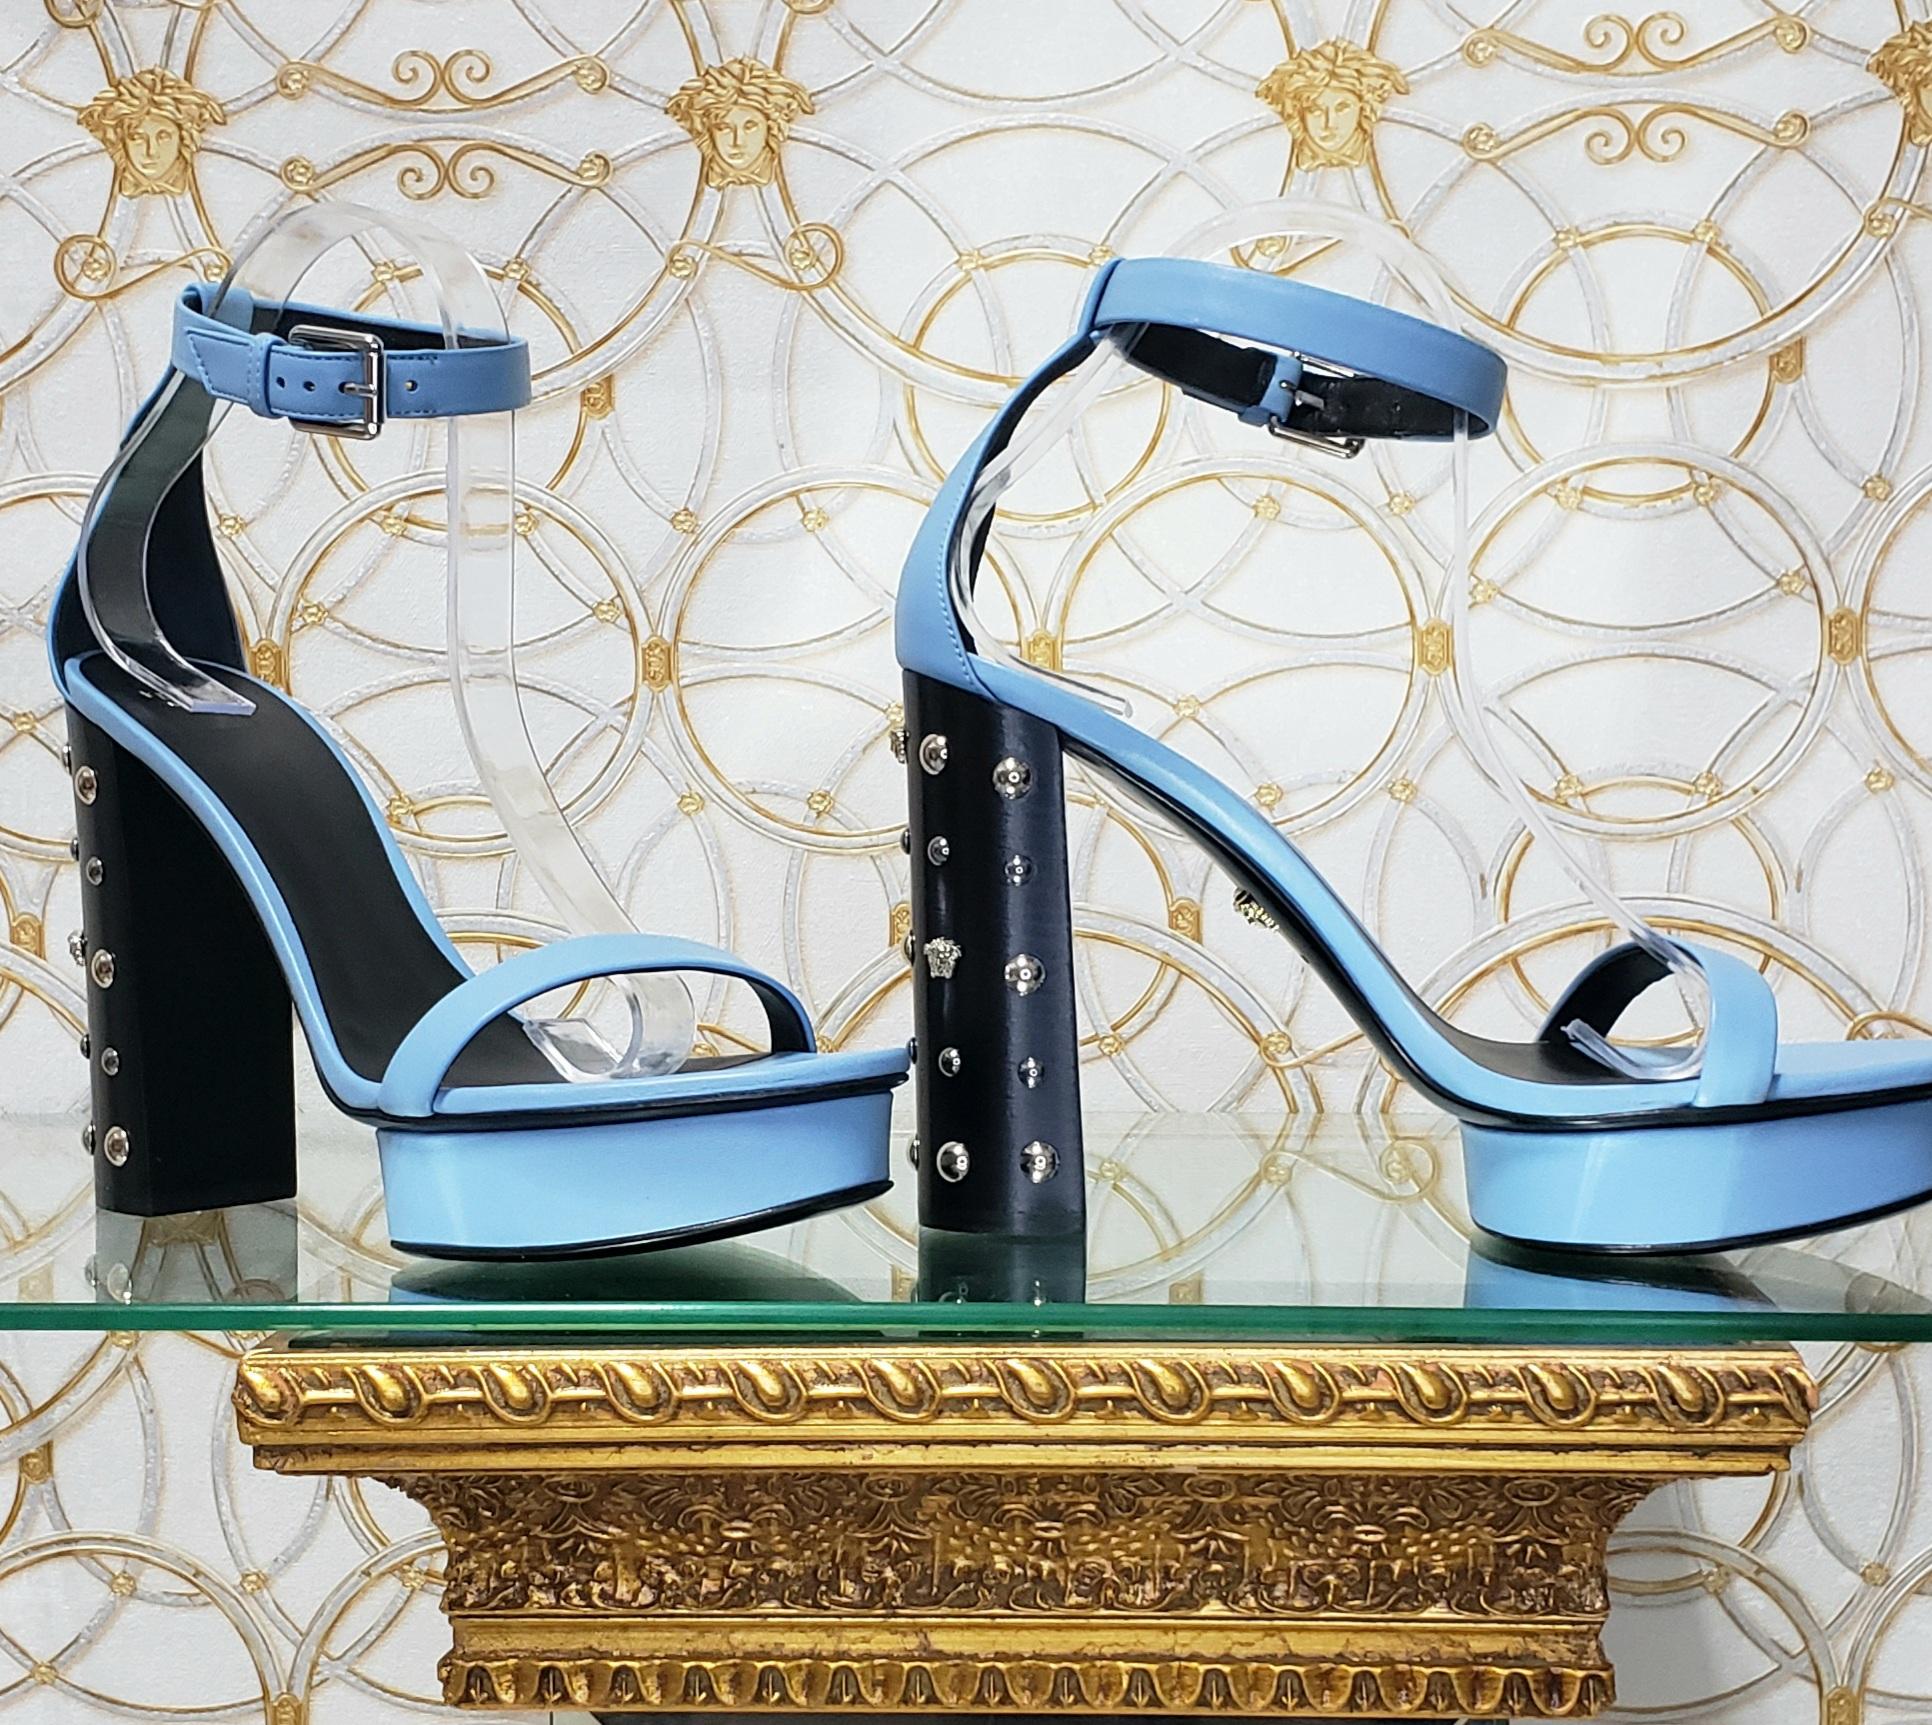 blue versace sandals